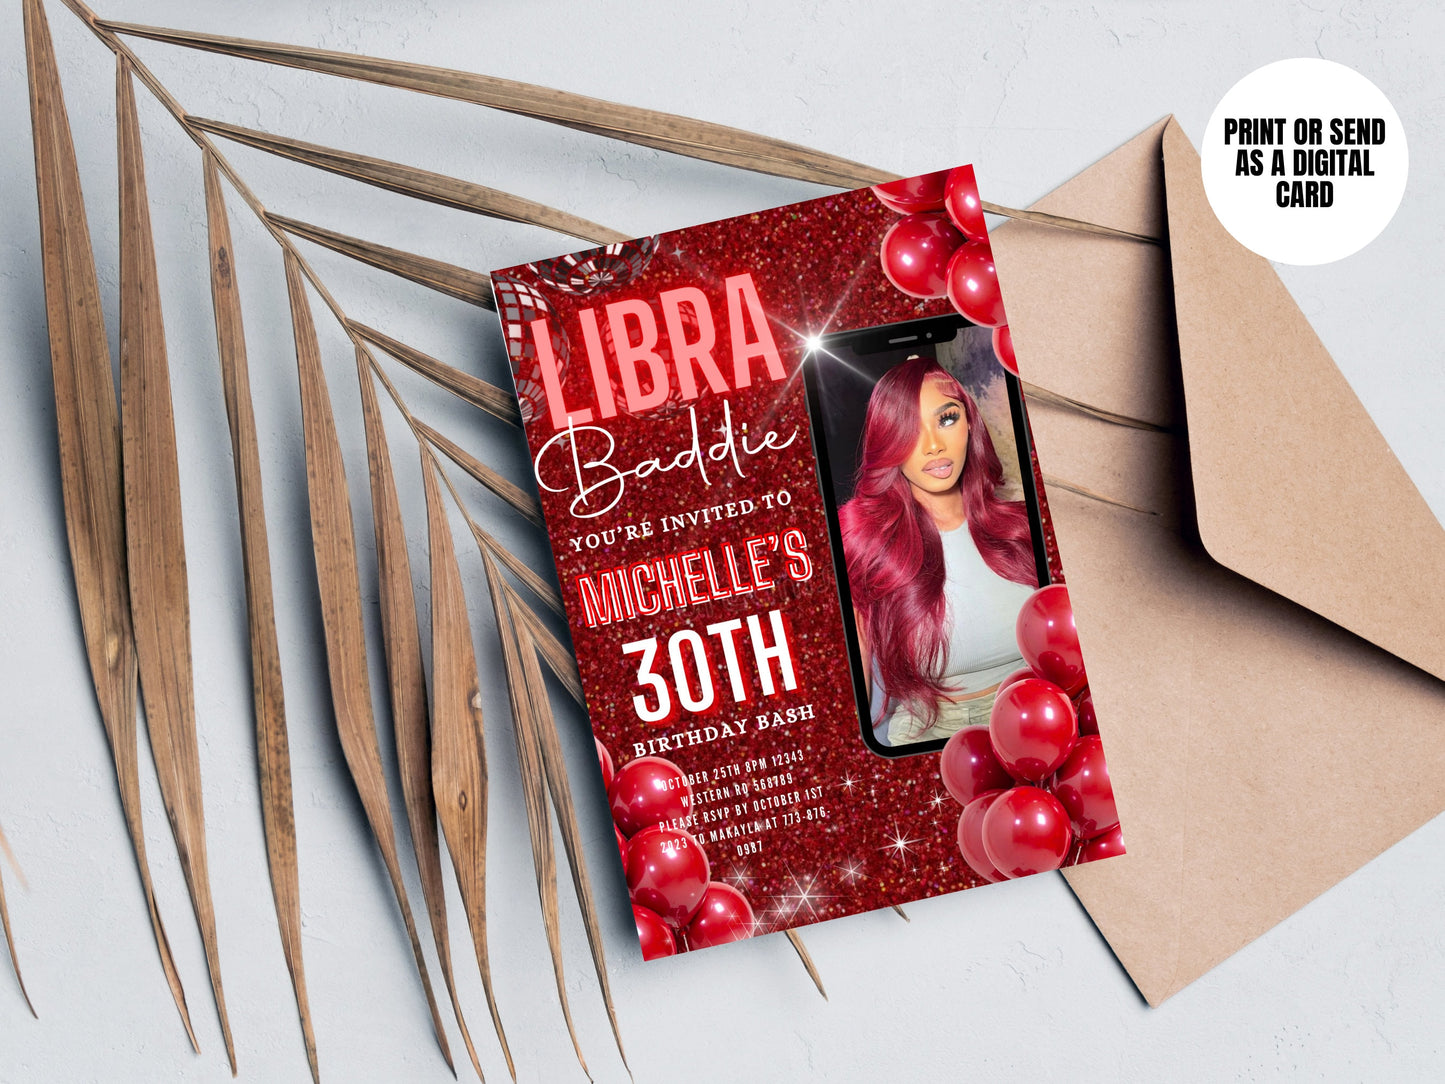 Red Libra invite, Digital Bday card, DIY invite Template Design, Birthday Party Invites Flyer, Premade Celebration birthday invite